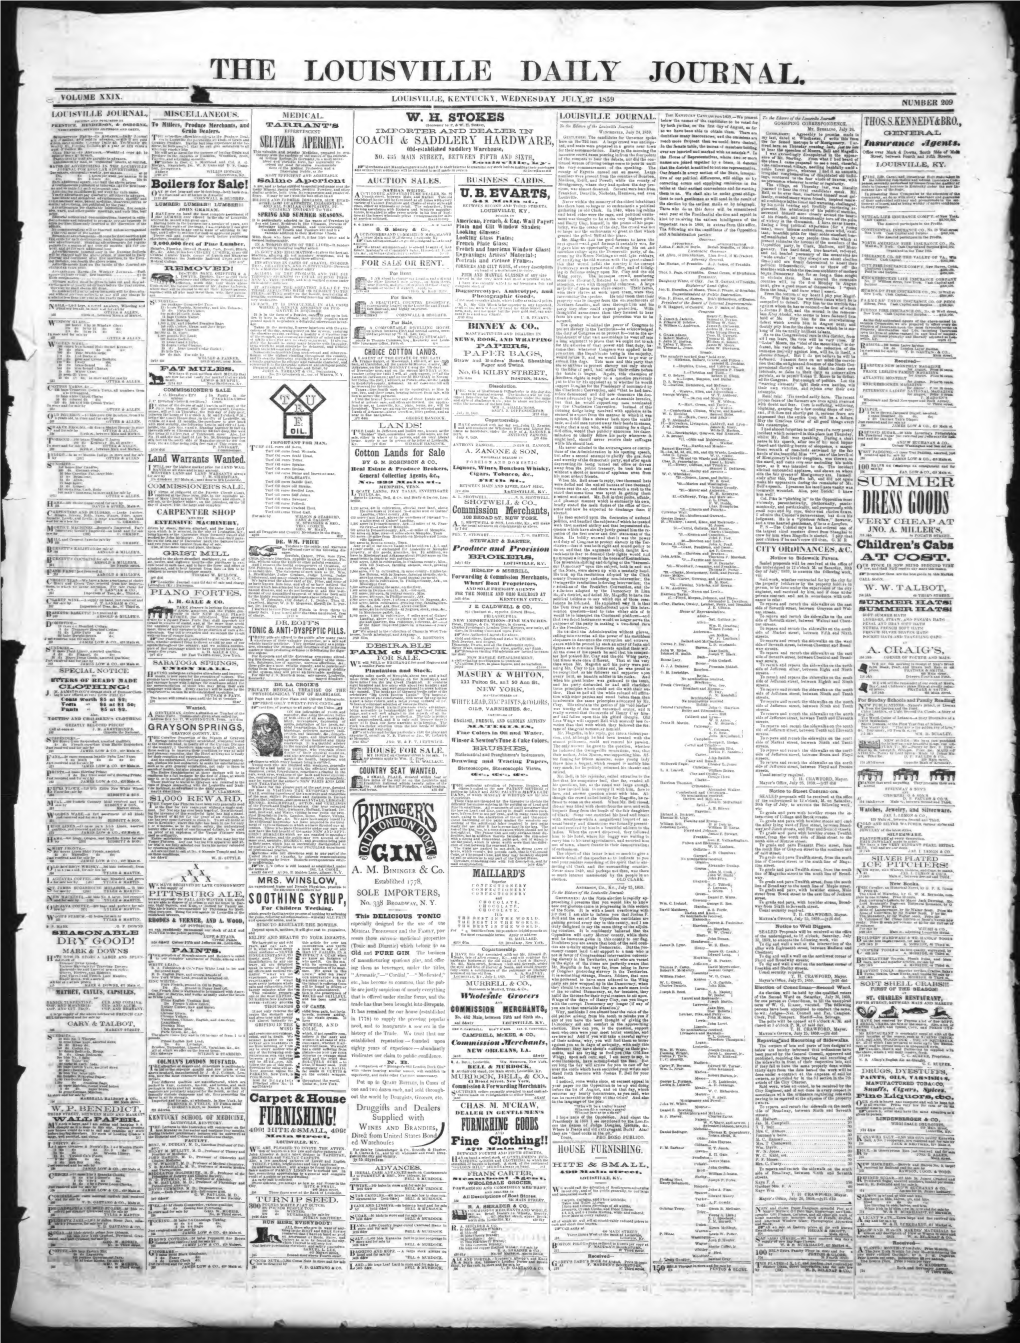 Louisville Daily Journal (Louisville, Ky. : 1833): 1859-07-27